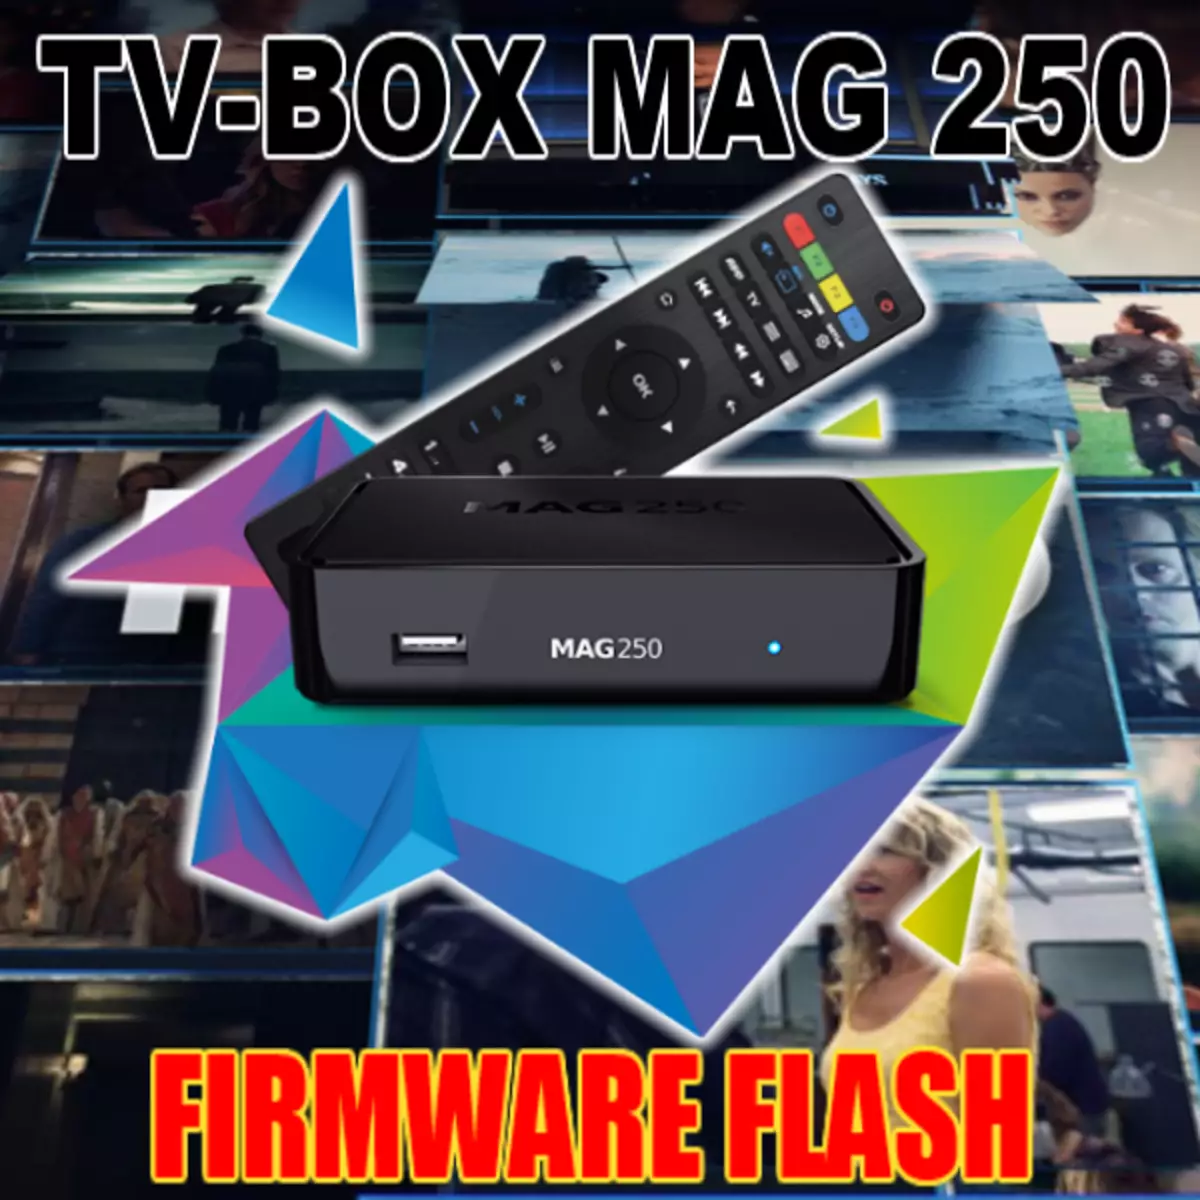 Consolas de TV de firmware MAG 250